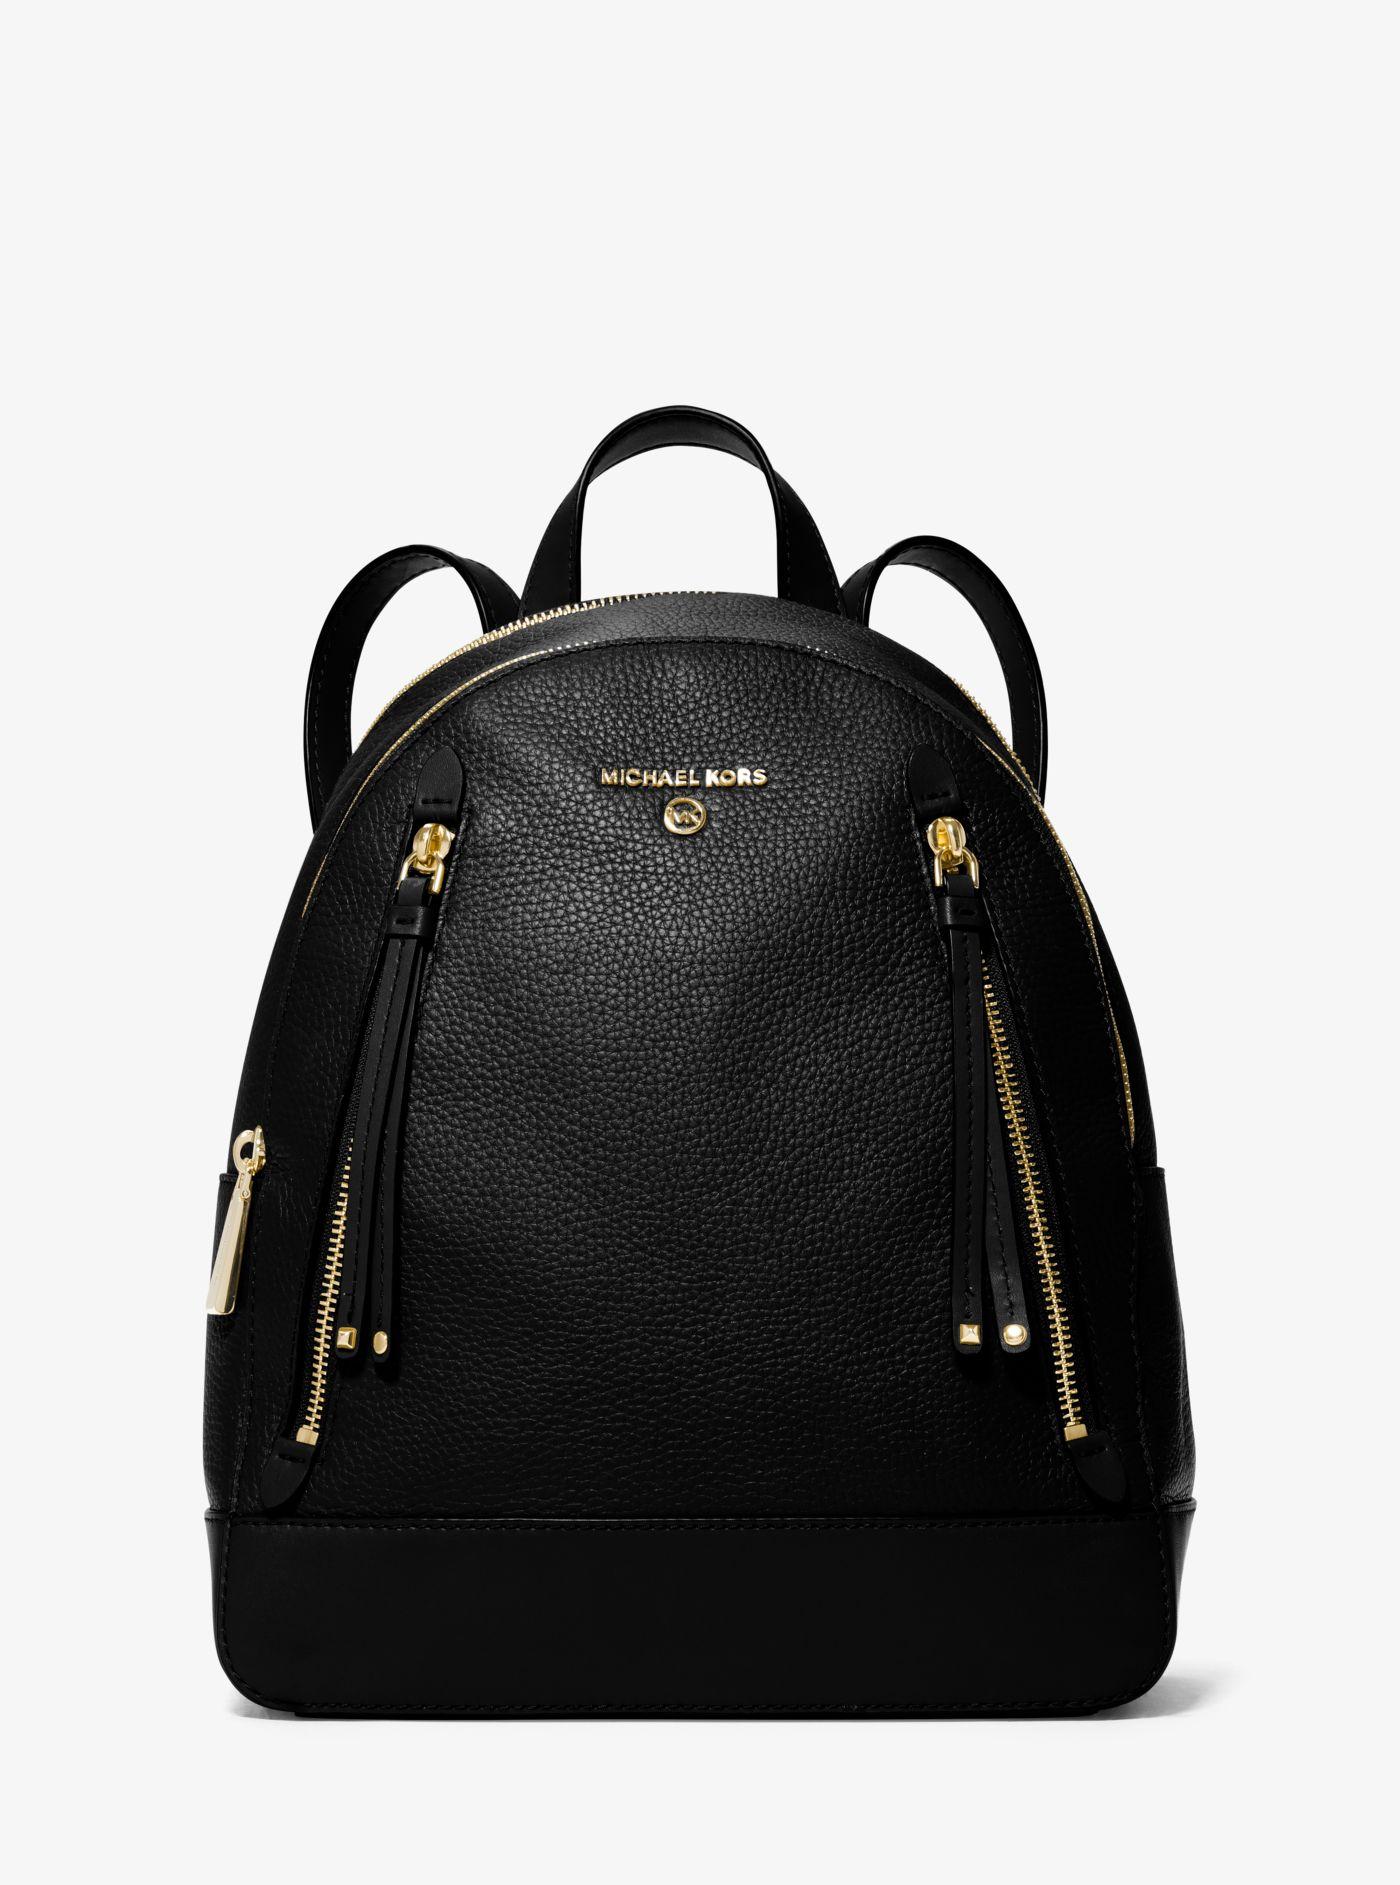 Michael Kors Brooklyn Medium Pebbled Leather Backpack in Black | Lyst ...